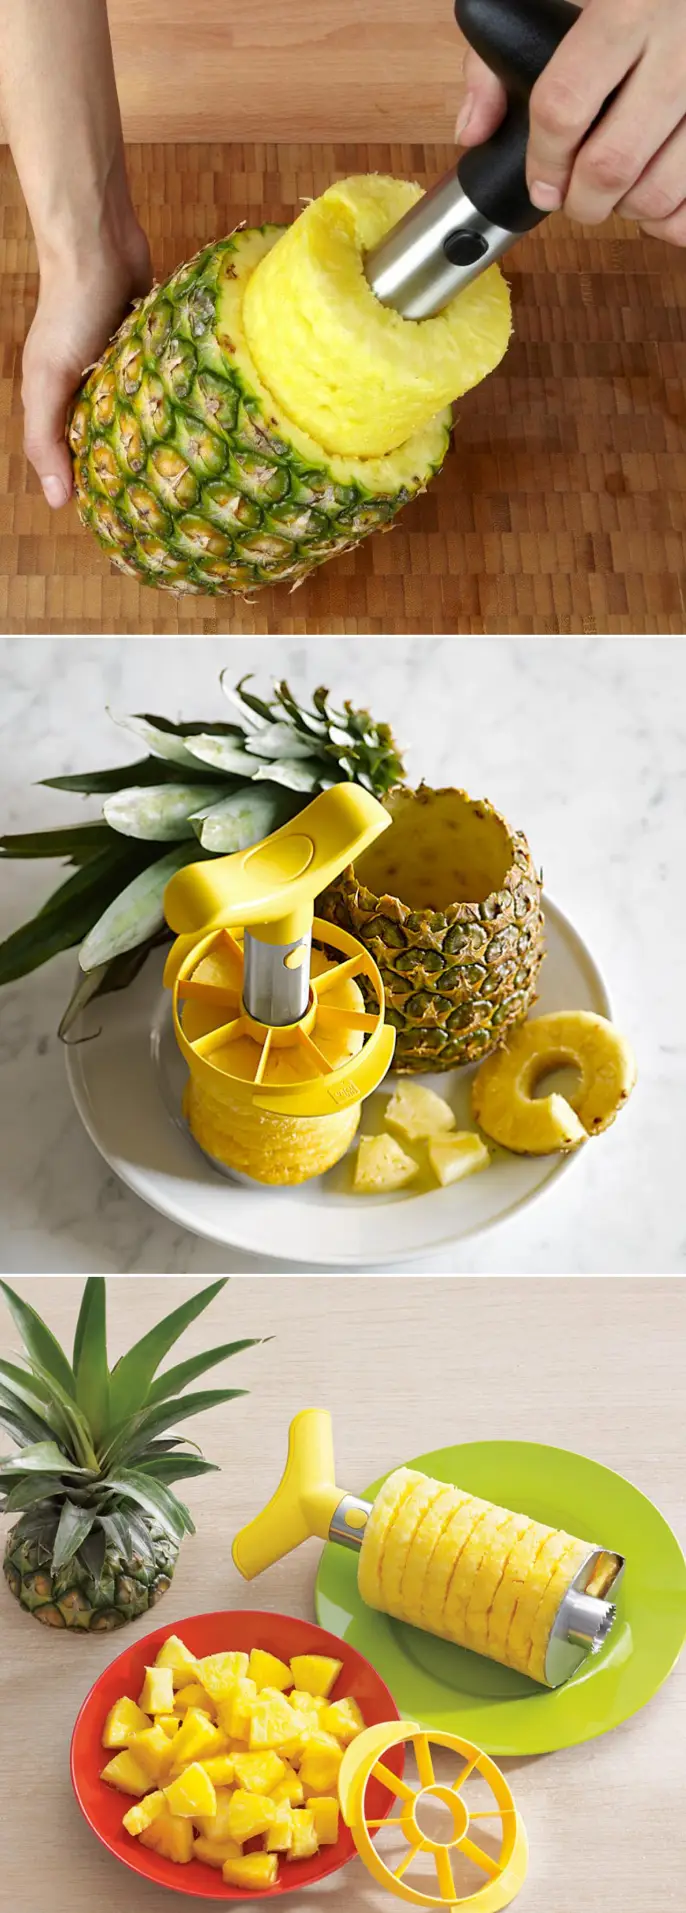 https://www.dontpayfull.com/blog/wp-content/uploads/2015/04/The-Cutest-20-Household-Gadgets-Pineapple-Slicer.jpg.webp